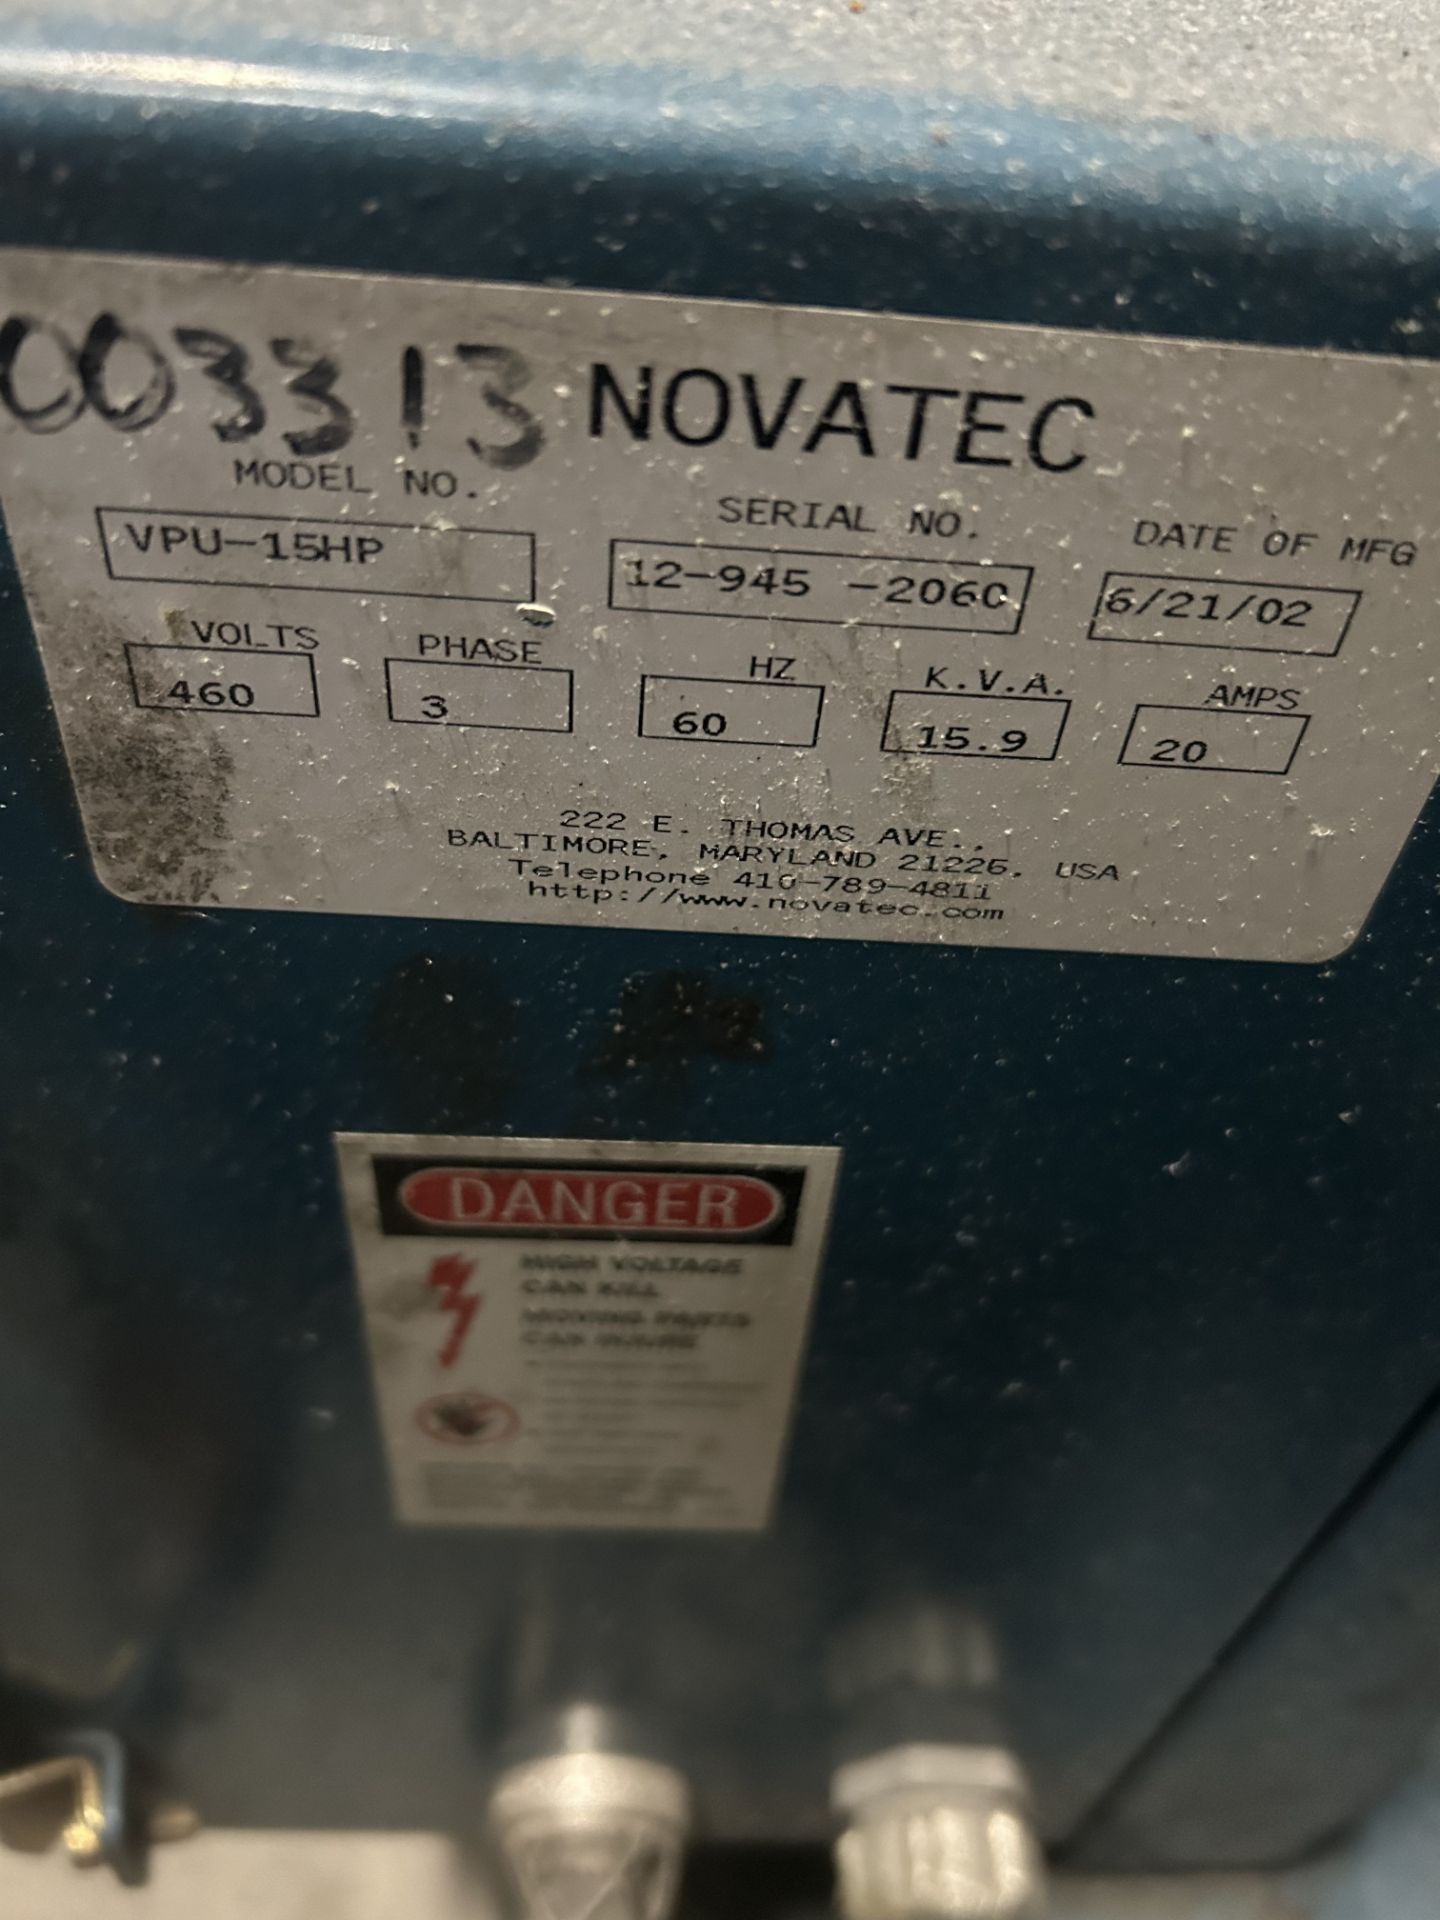 Novatec model VPU-15hp vacuum pump - Image 3 of 3